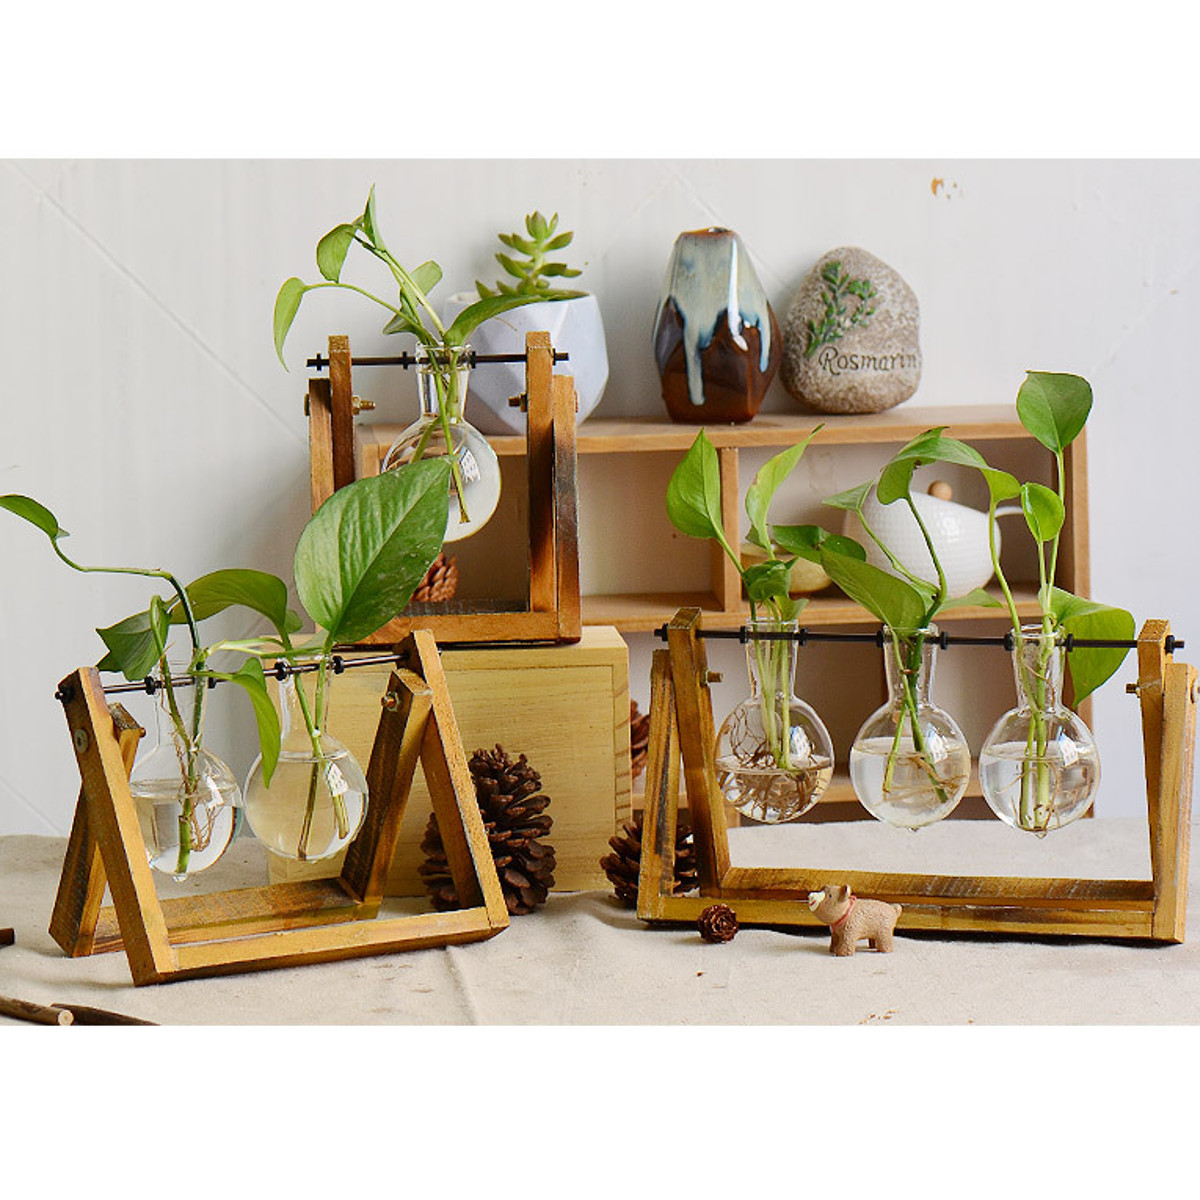 Wooden-Stand-Glass-Terrarium-Container-Hydroponic-System-Plant-Planter-Flower-Pot-Desk-Decoration-1436739-8